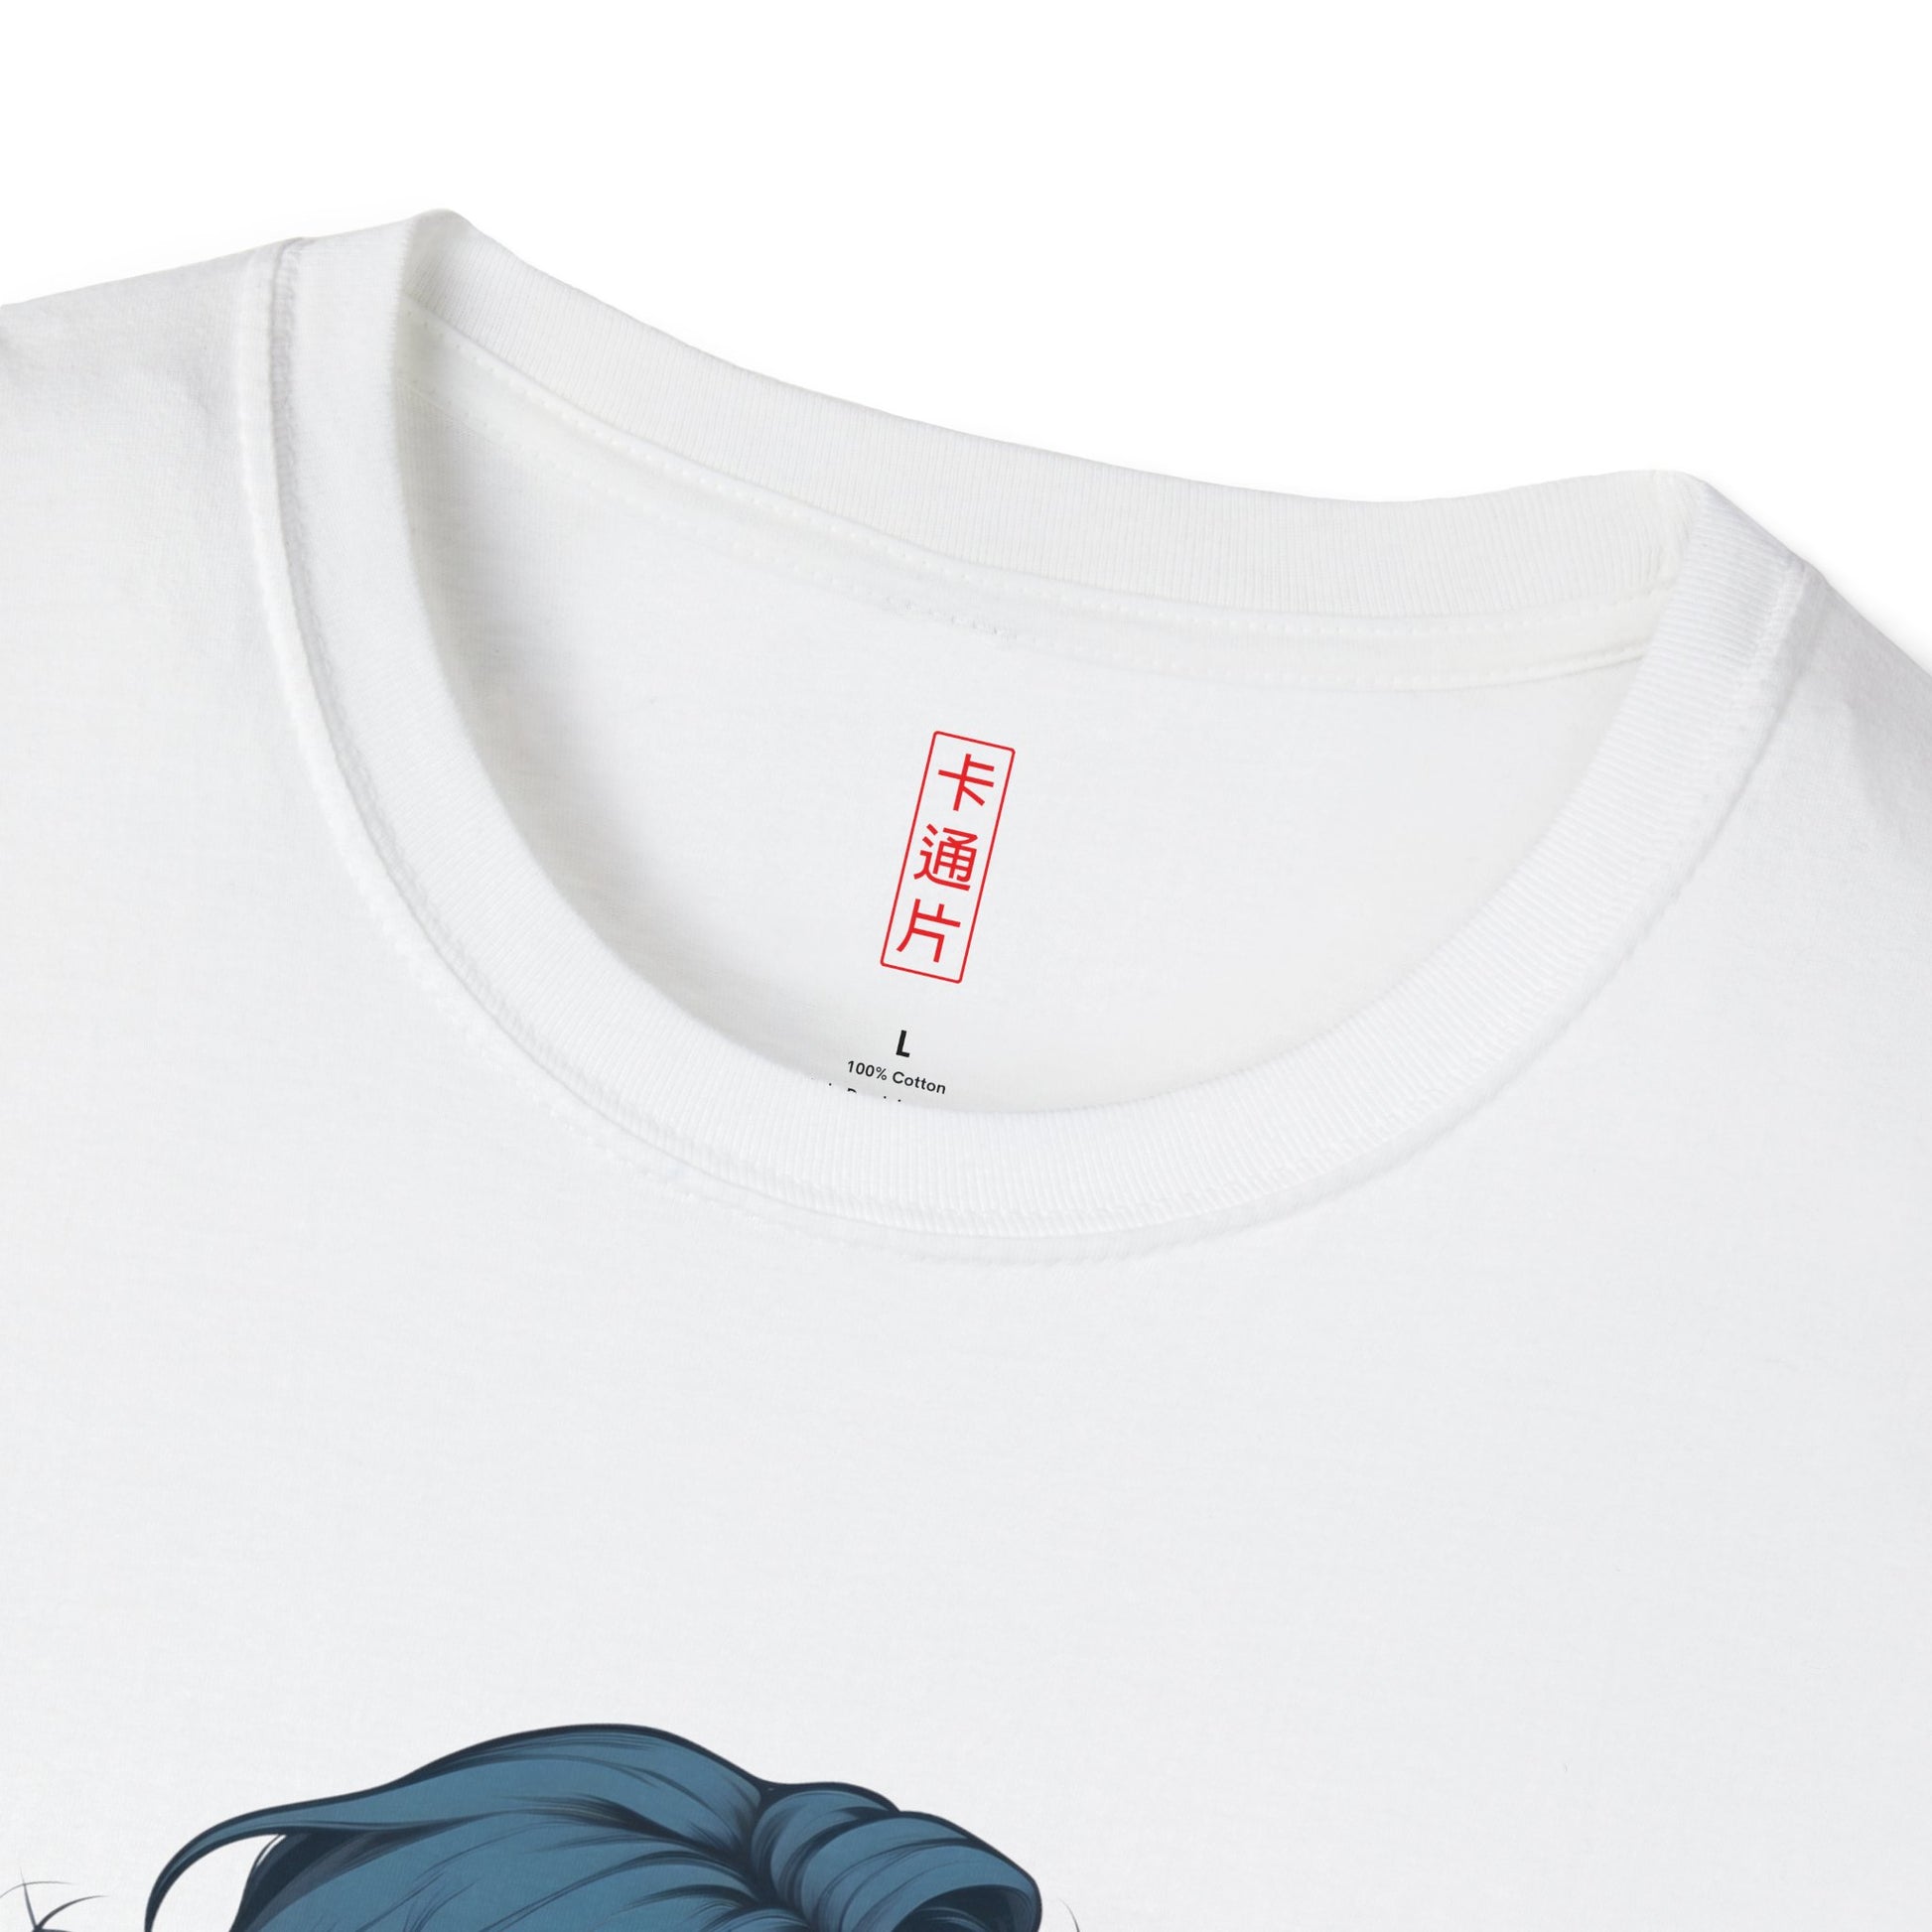 Kǎtōng Piàn - California Love Collection - 027 - Unisex Softstyle T-Shirt Printify